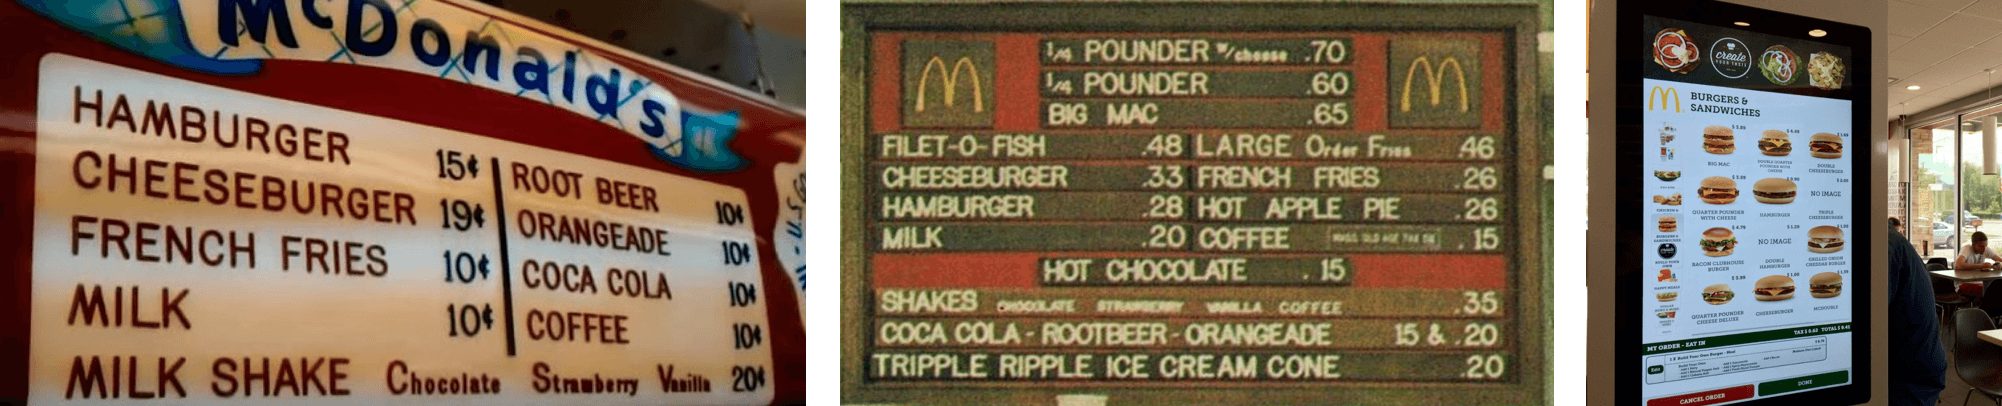 mcdonalds menu merchandising